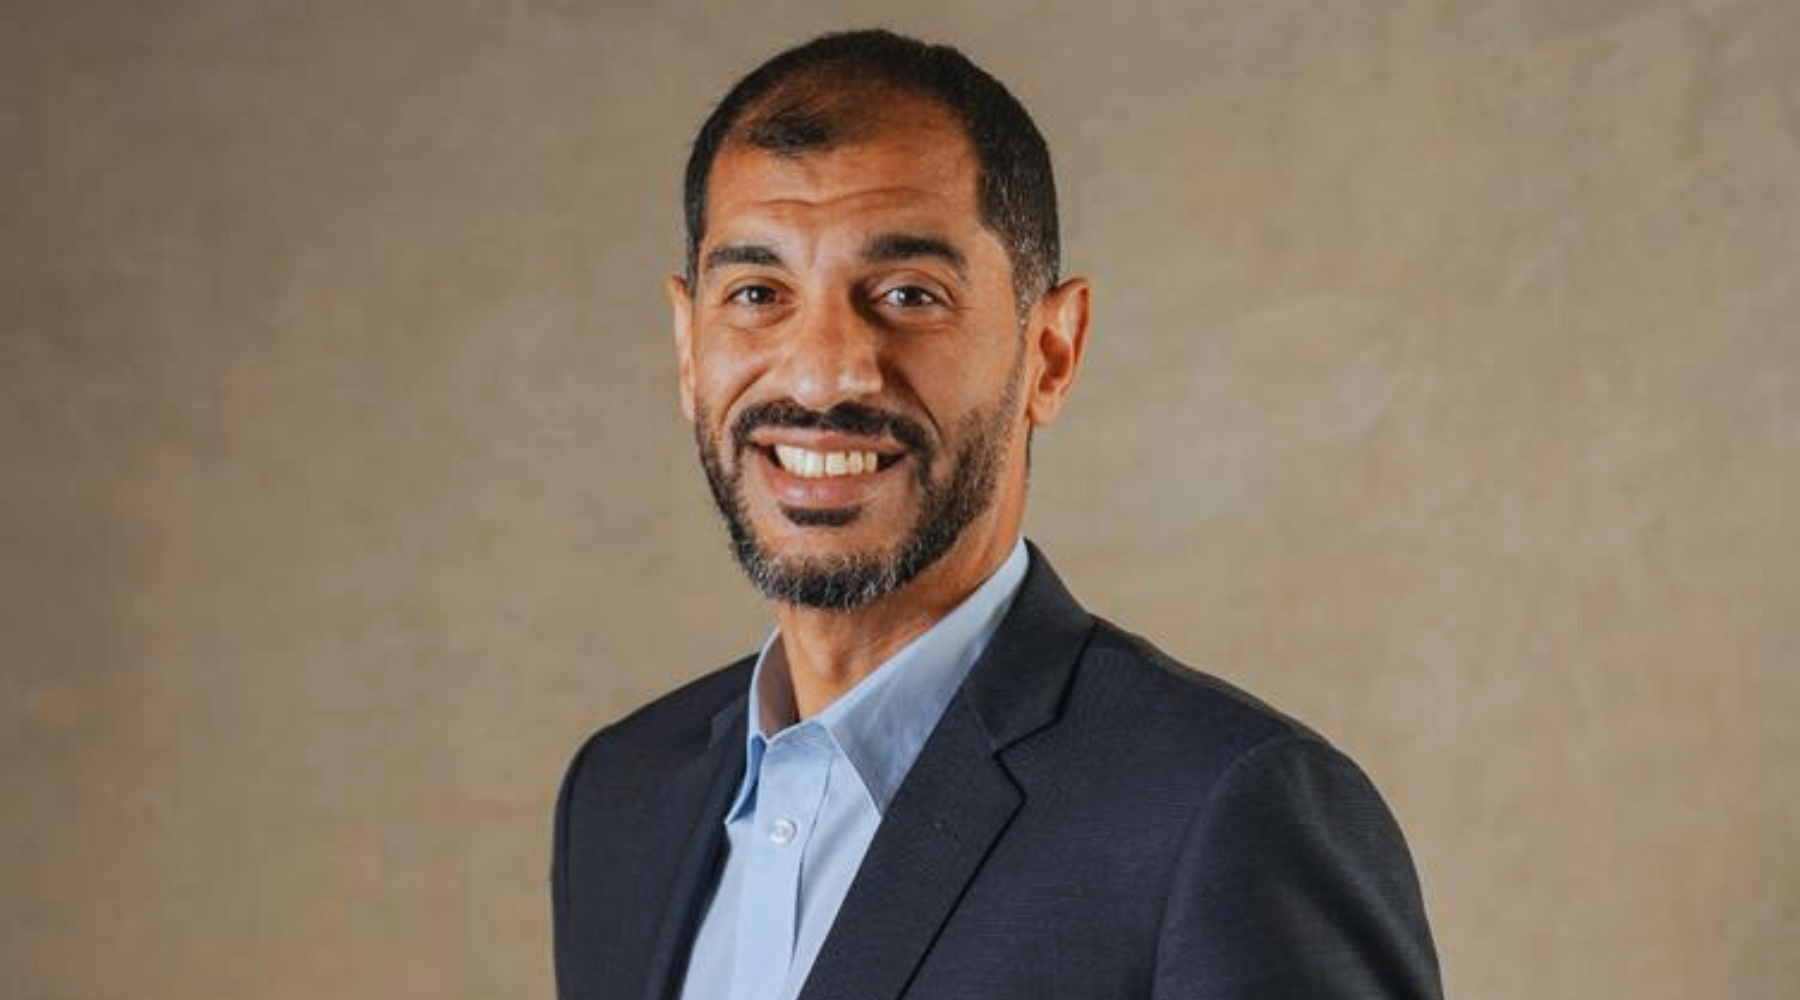 OMD Egypt’s Tarek Jaffar Takes Helm as CEO